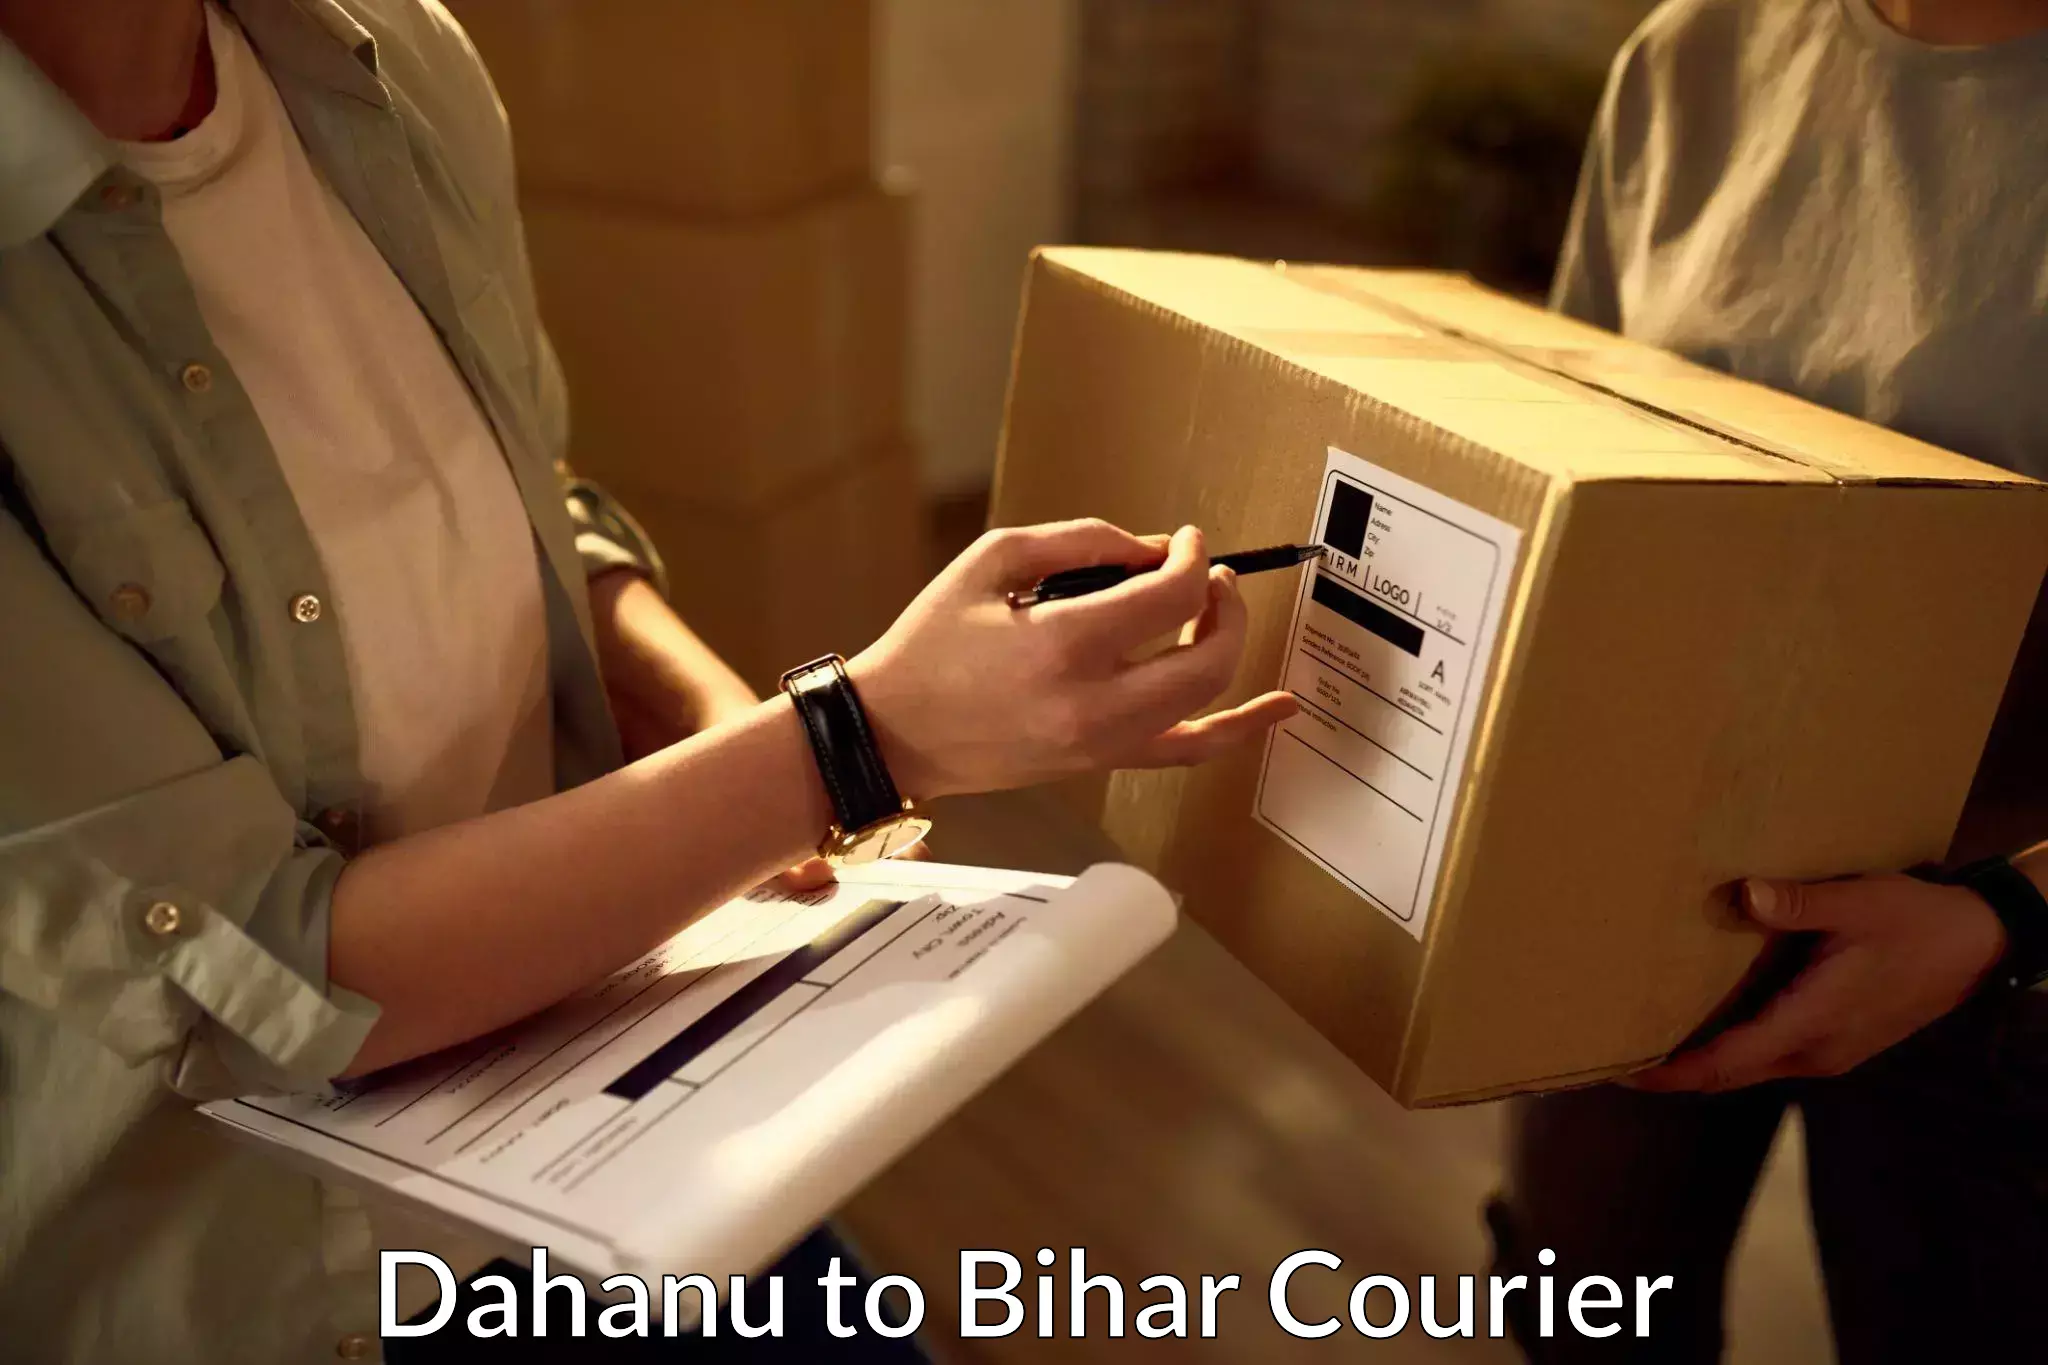 Local delivery service Dahanu to Bihar